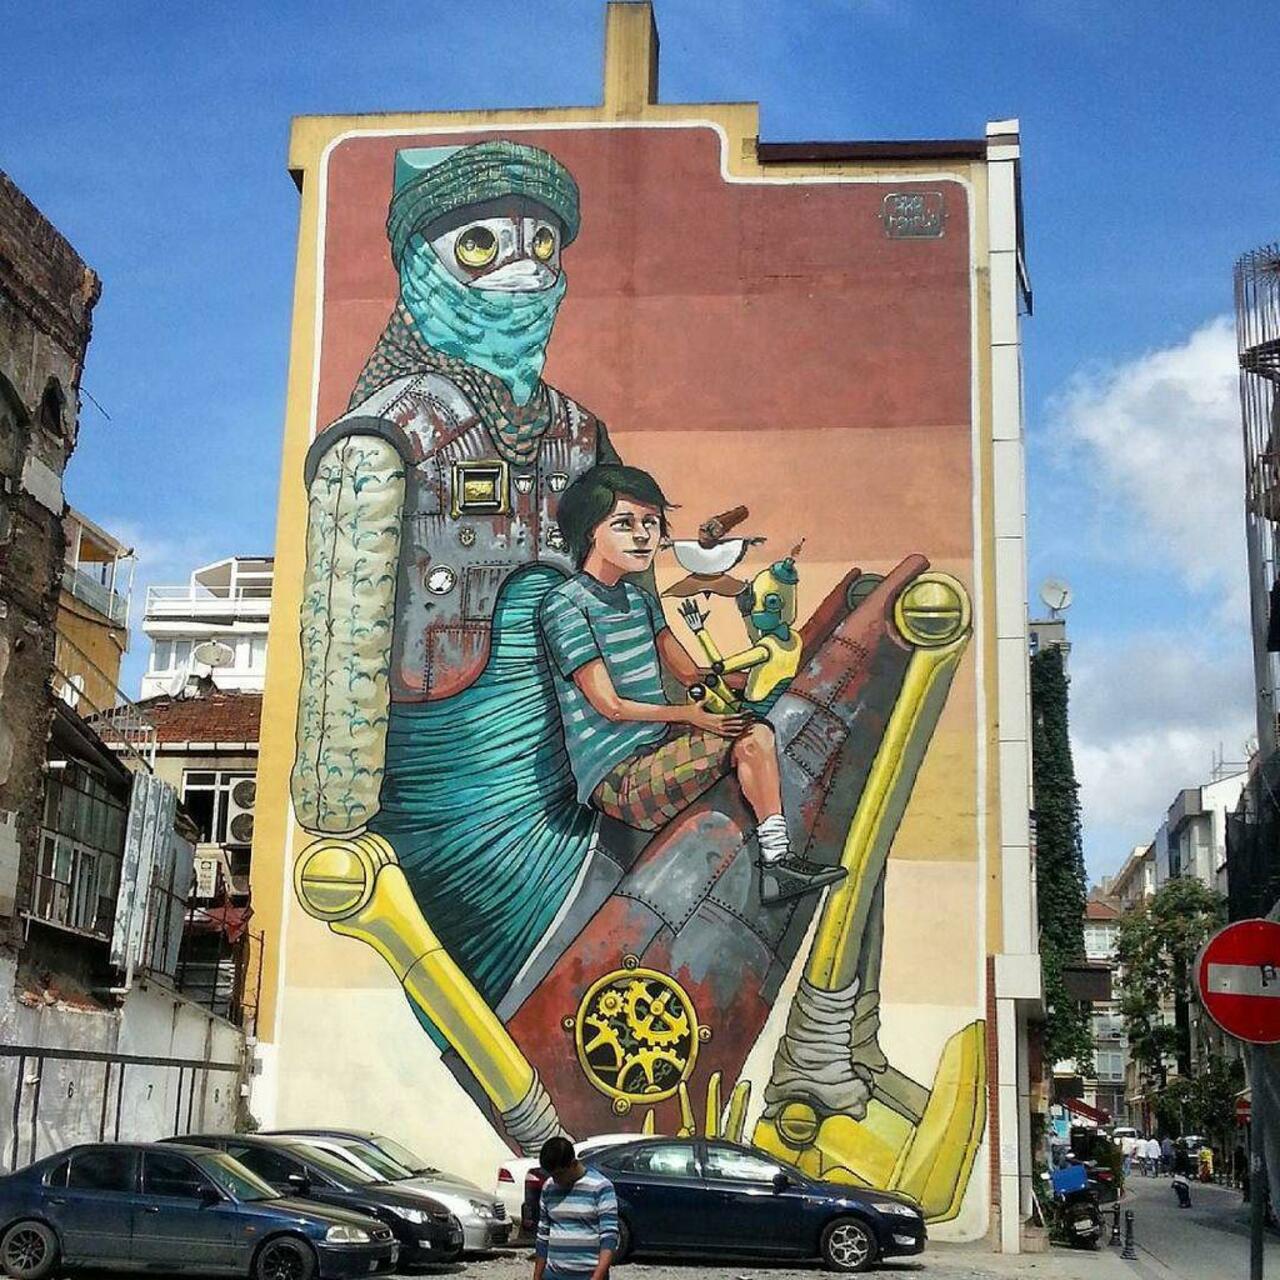 Pixel pancho / bambino 2012 #streetartkadikoy #streetart #graffiti #publicart #urbanart #sokaksanatı #streetartista… http://t.co/2jk2GDwpe5